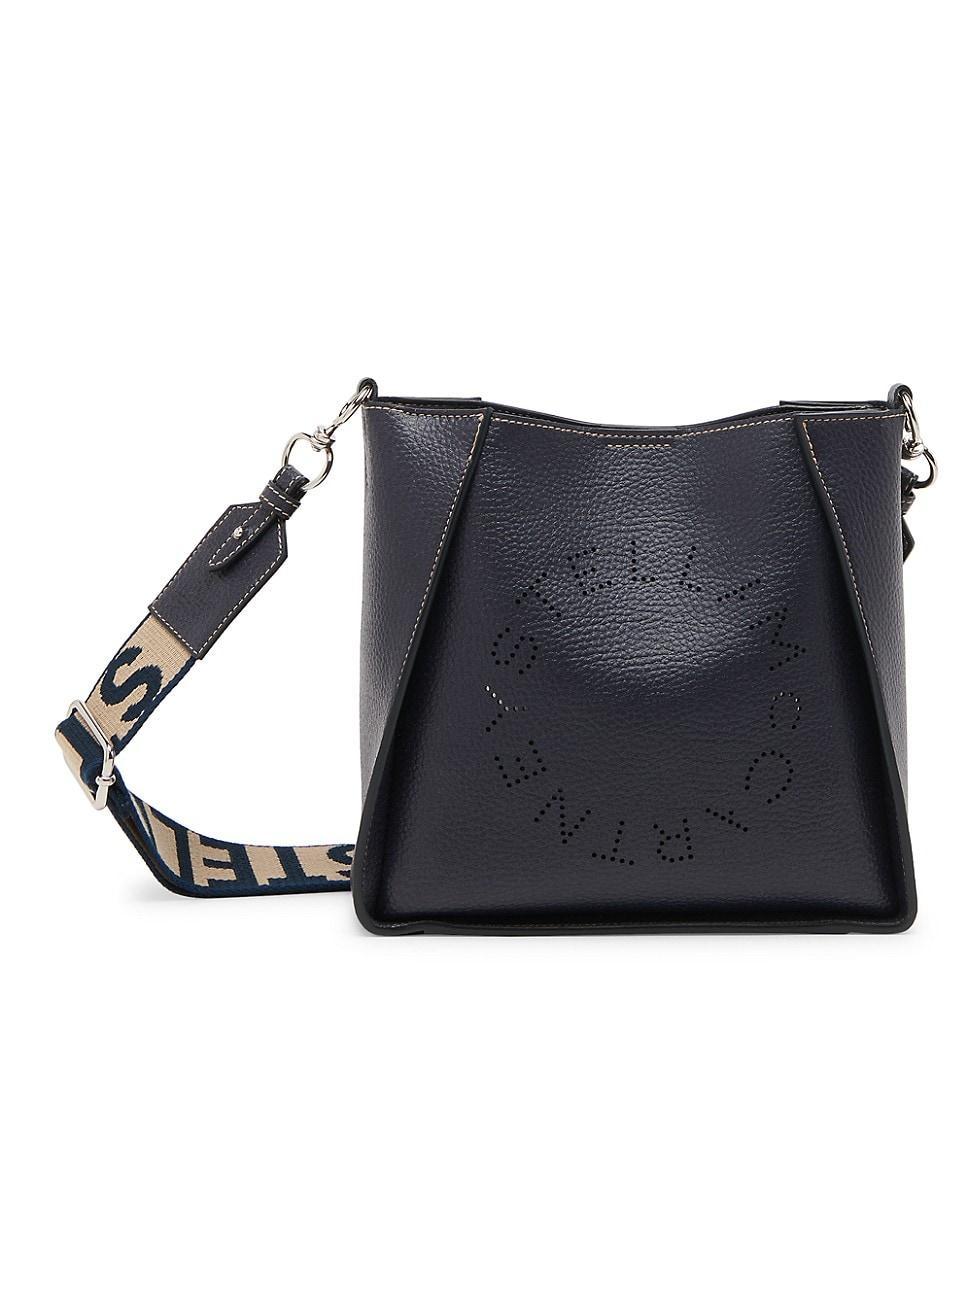 Stella McCartney Perforated Logo Mini Faux Leather Crossbody Bag Product Image